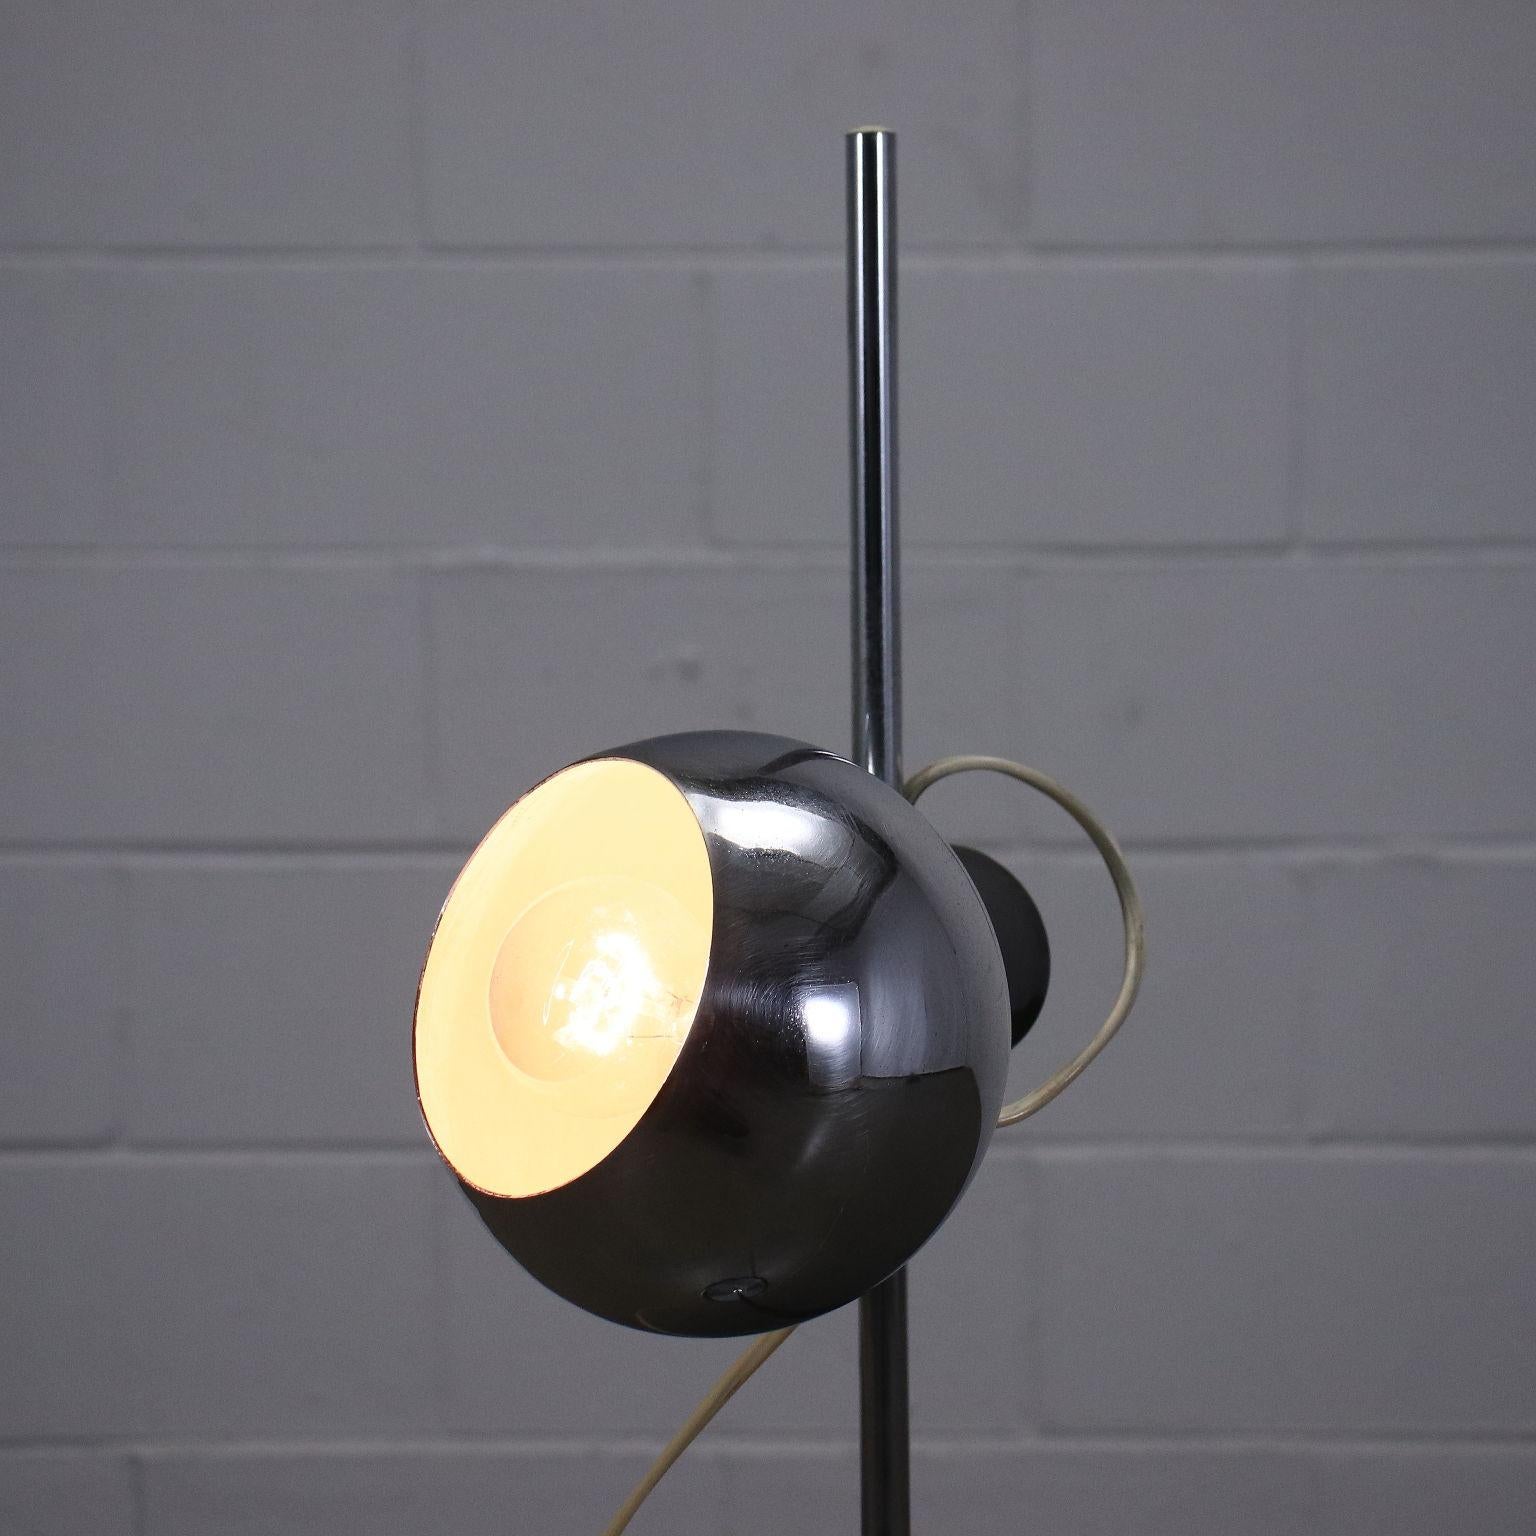 Mid-Century Modern Reggiani Lamp from the 1960s